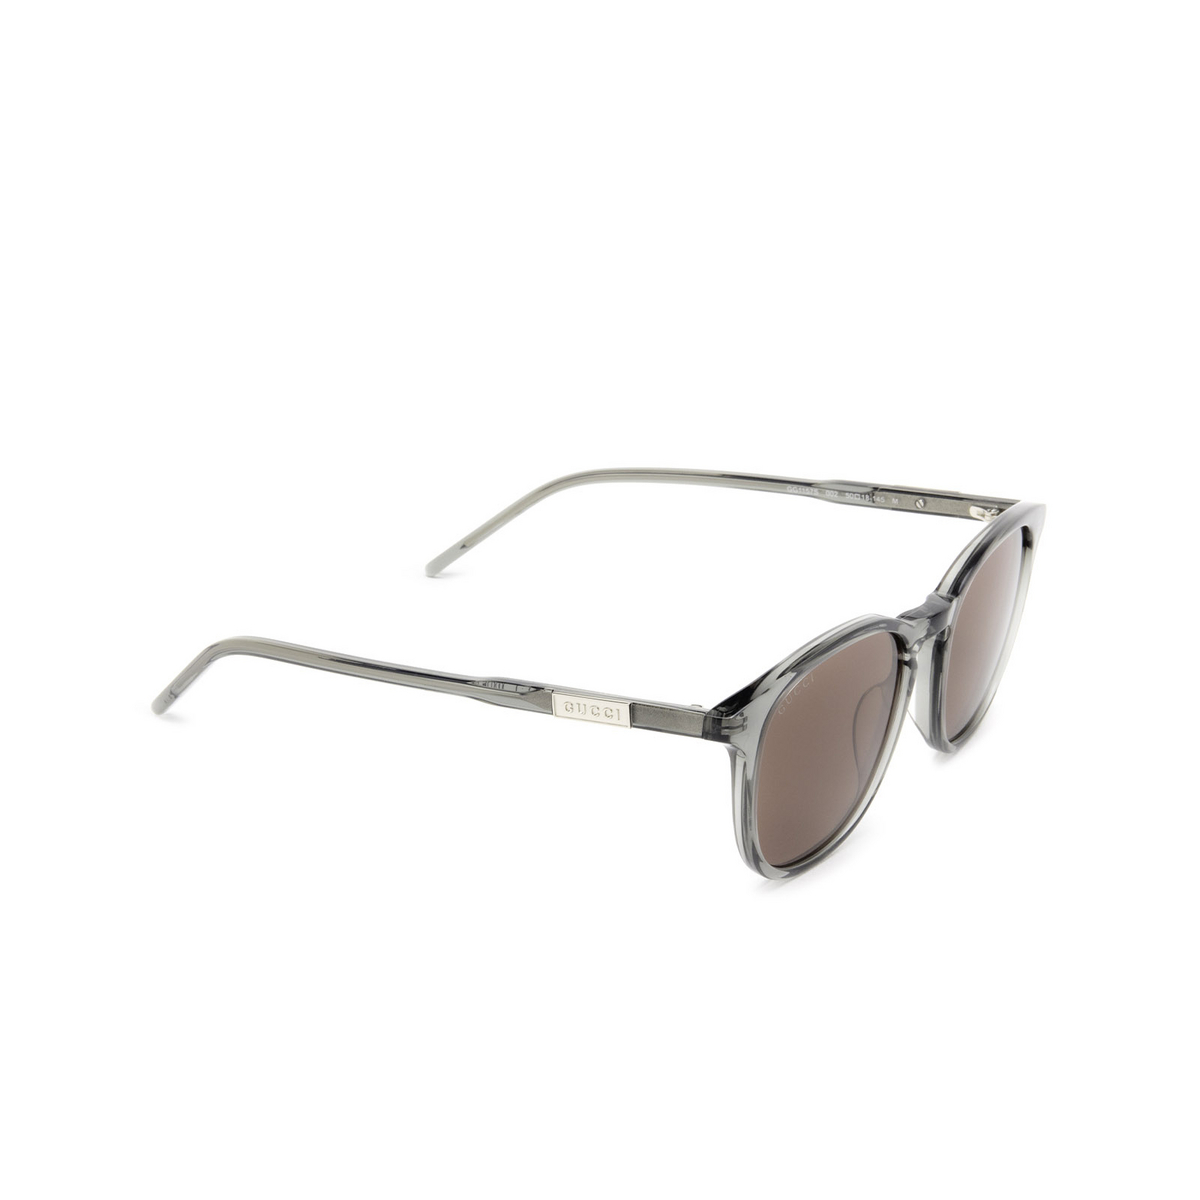 Gucci® Round Sunglasses: GG1157S color Transparent Grey 002 - three-quarters view.